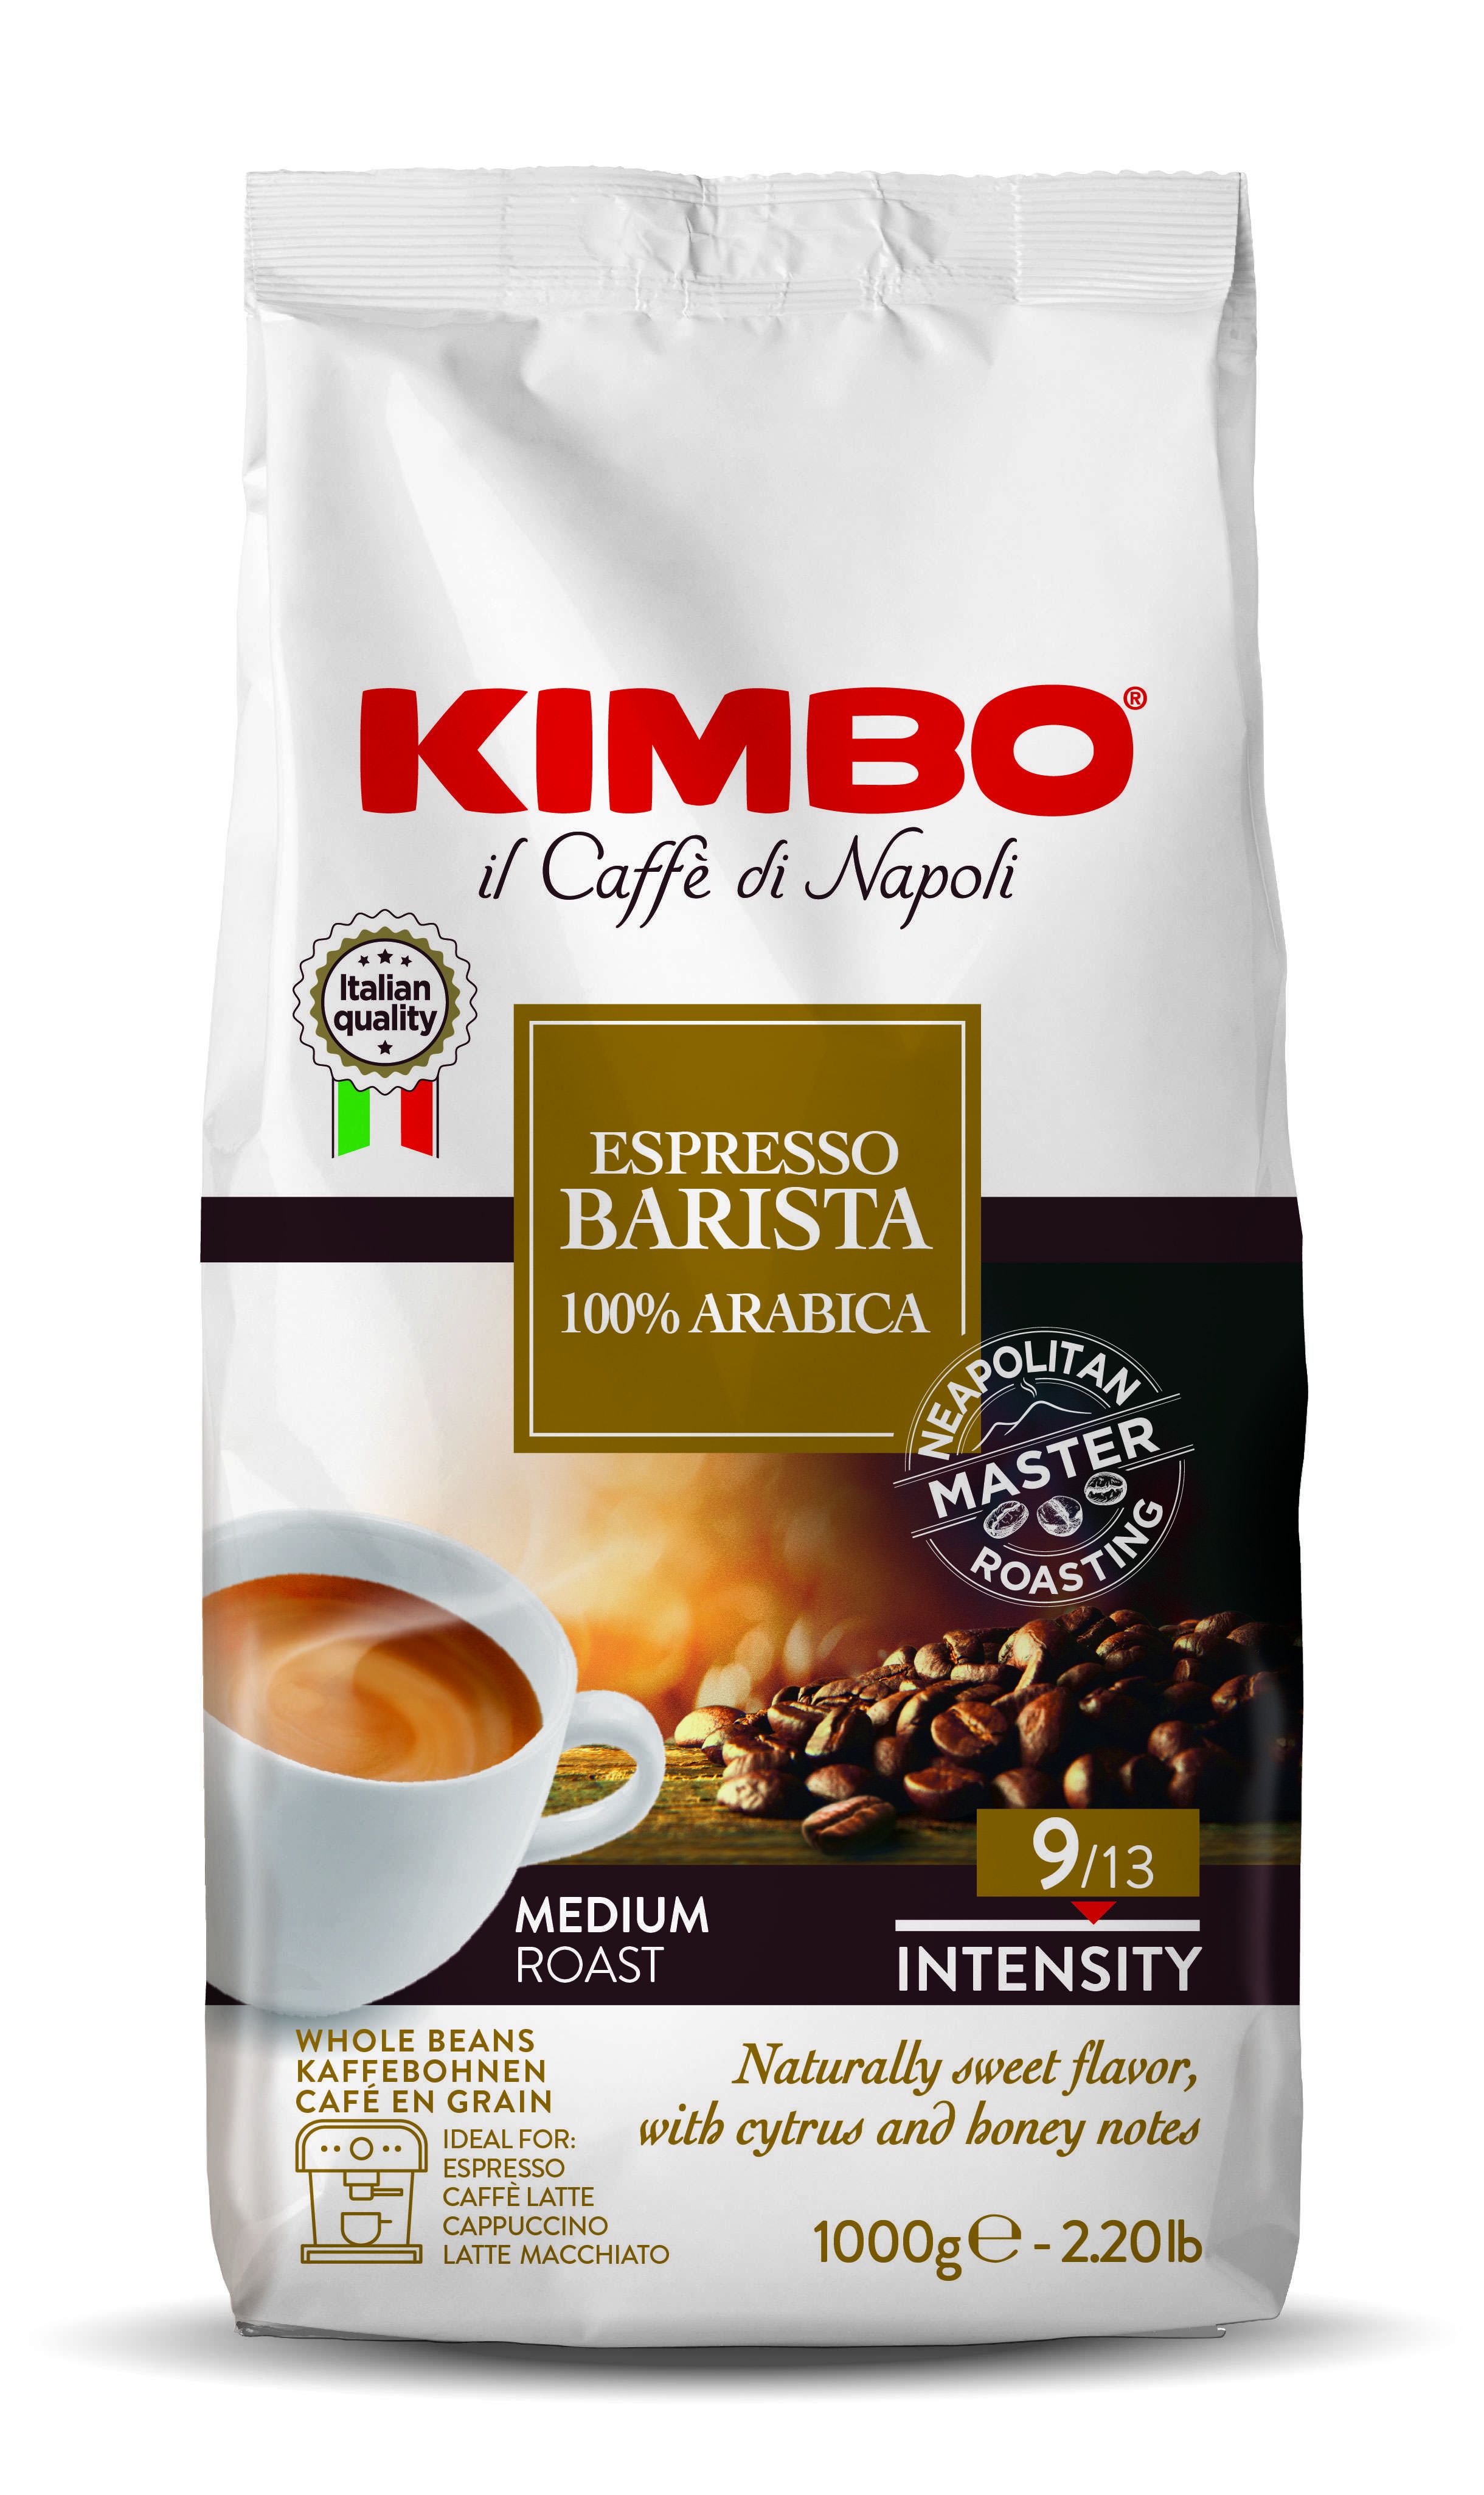 KIMBO S.p.A. Espresso Barista 100% Arabica ganze Kaffeebohnen 1kg